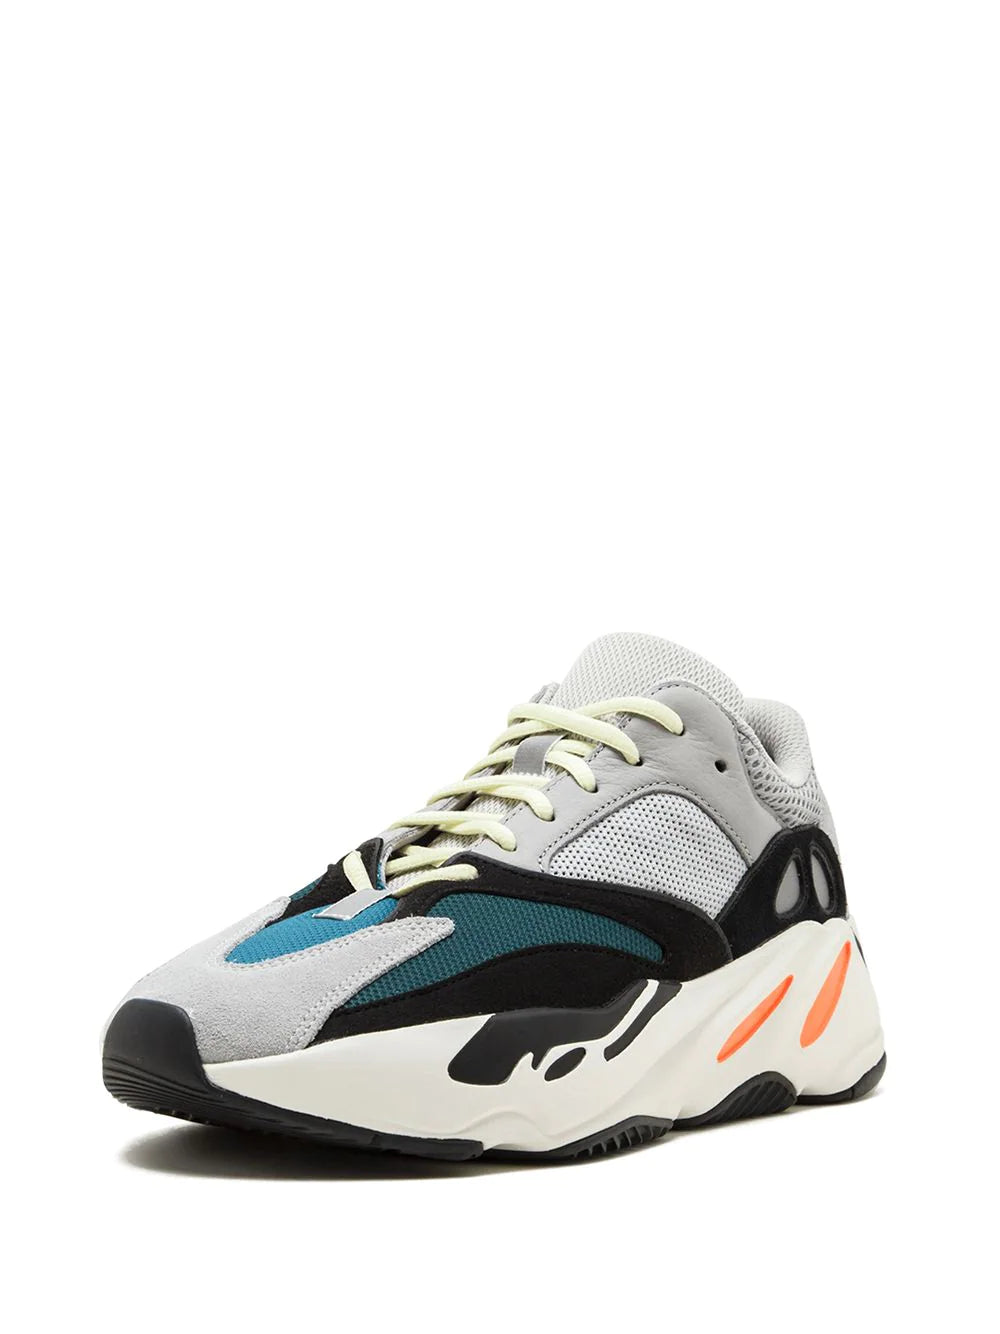 corazón perdido evolución Canoa ADIDAS Yeezy Boost 700 "Wave Runner" sneakers – Space Lab Brand